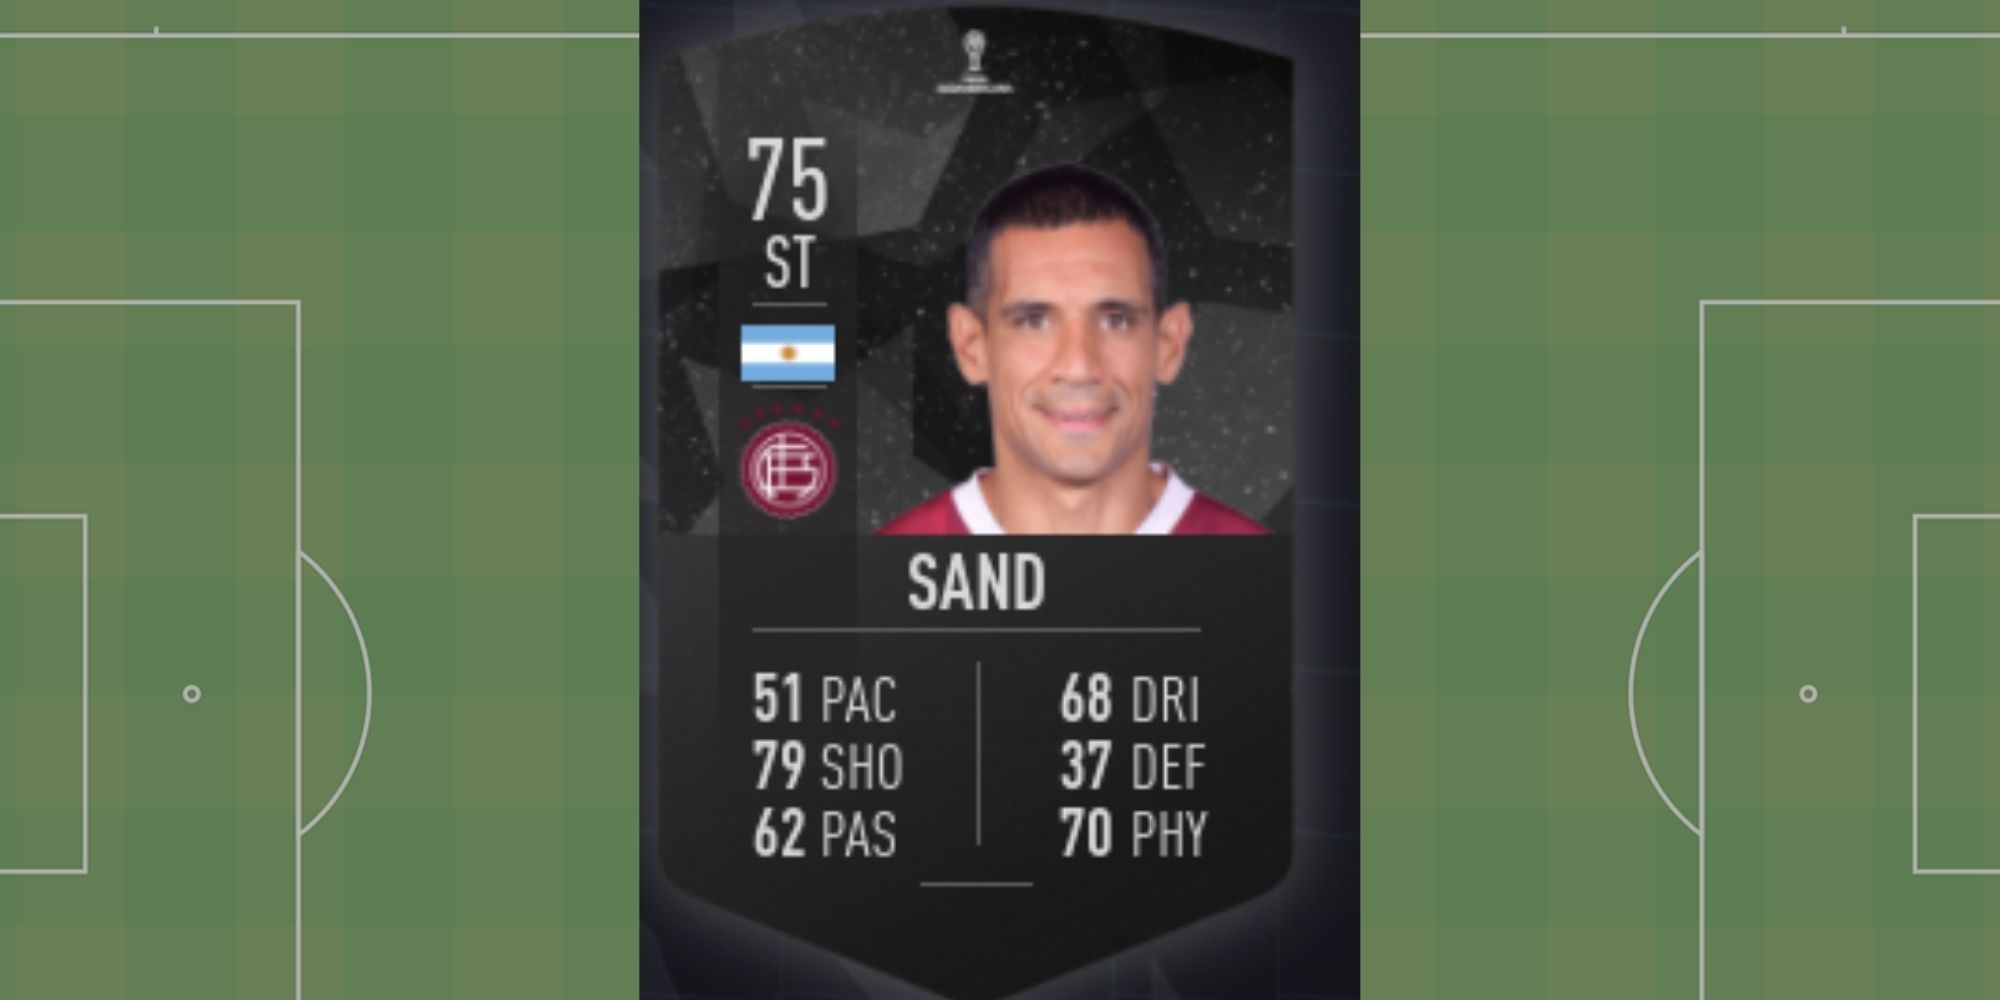 Jose Sand's FUT card in FIFA 22.